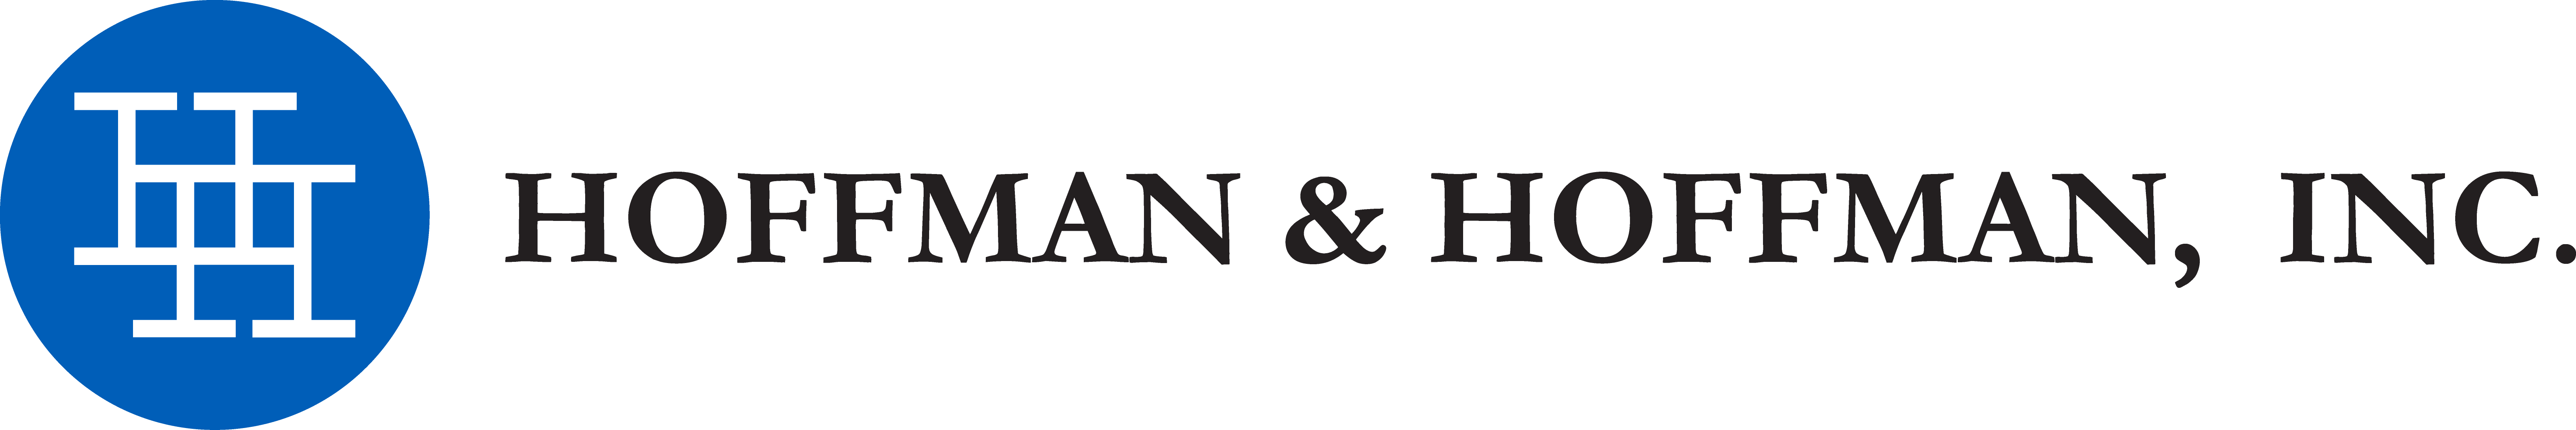 Commercial HVAC Hoffman & Hoffman